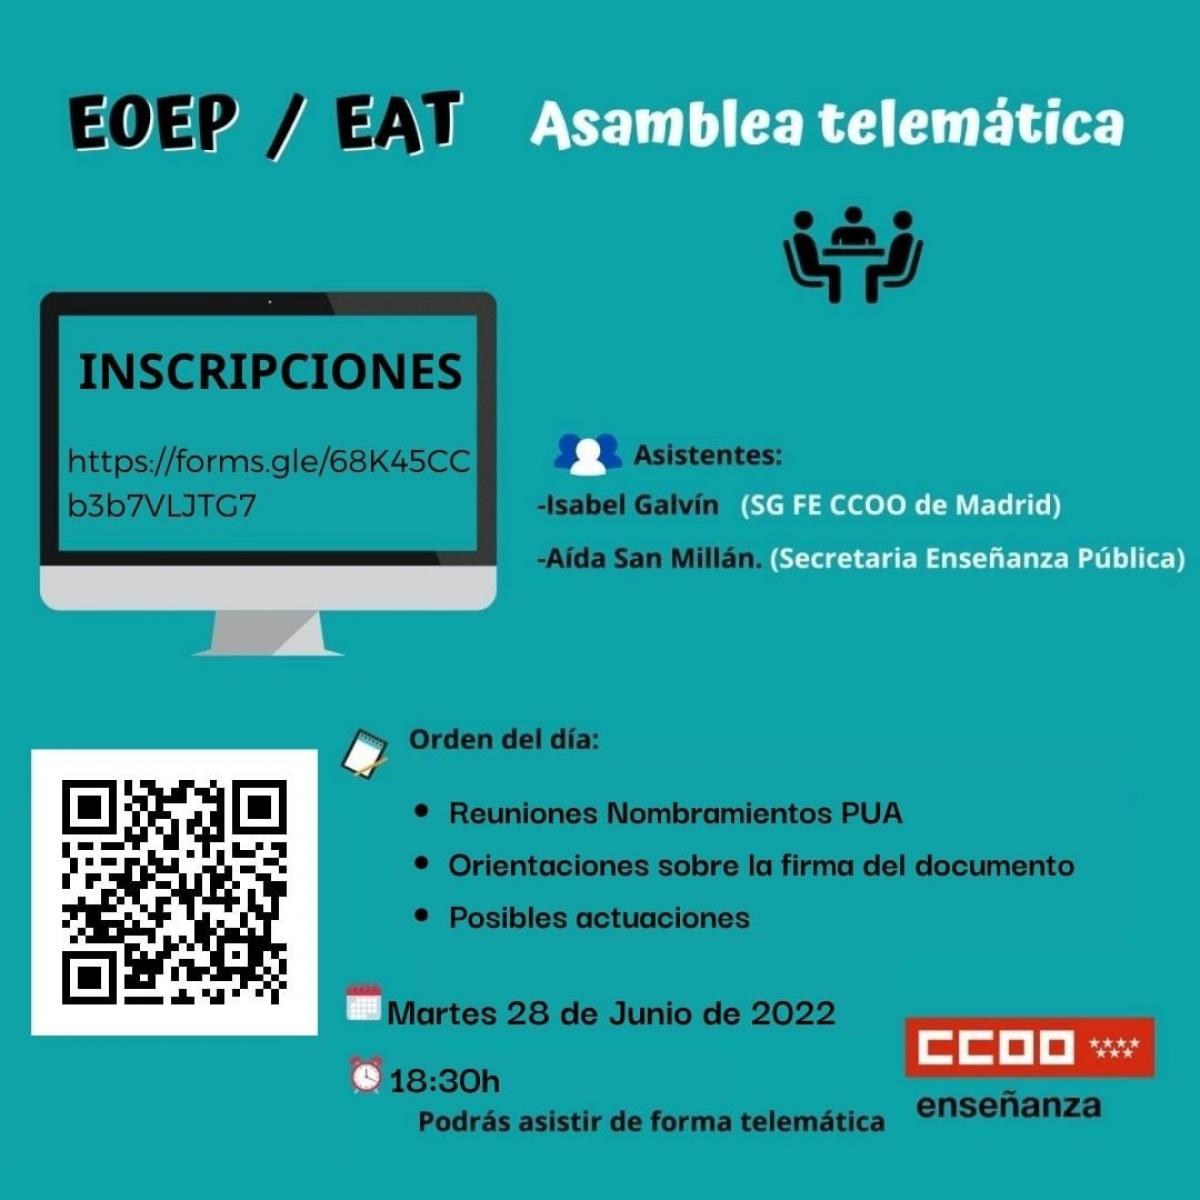 Asamblea telemática EOEP / EAT